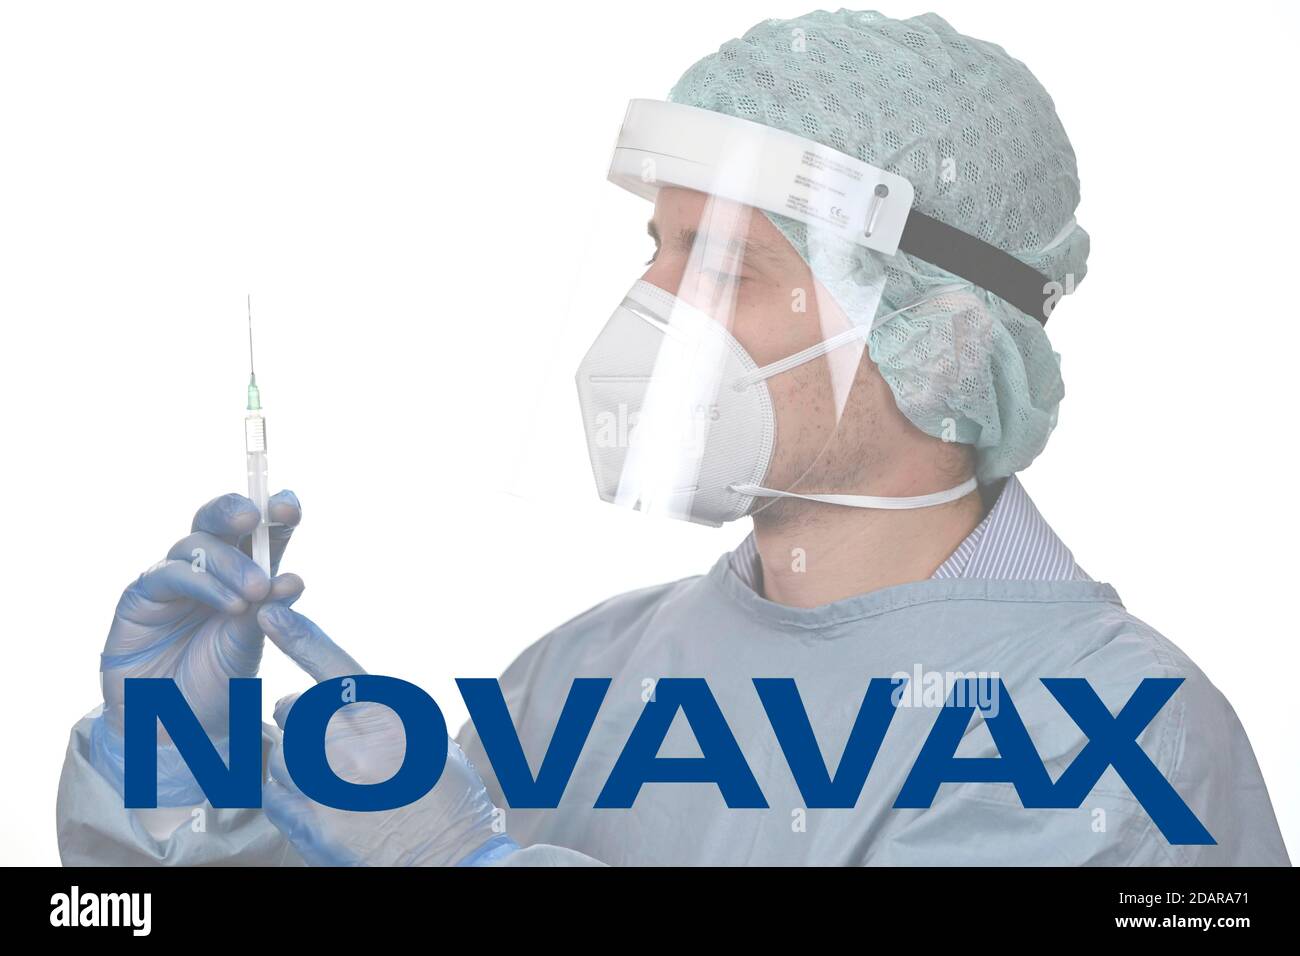 Image symbole vaccin Corona de NOVAVAX, homme avec seringue, crise corona, Bade-Wurtemberg, Allemagne Banque D'Images